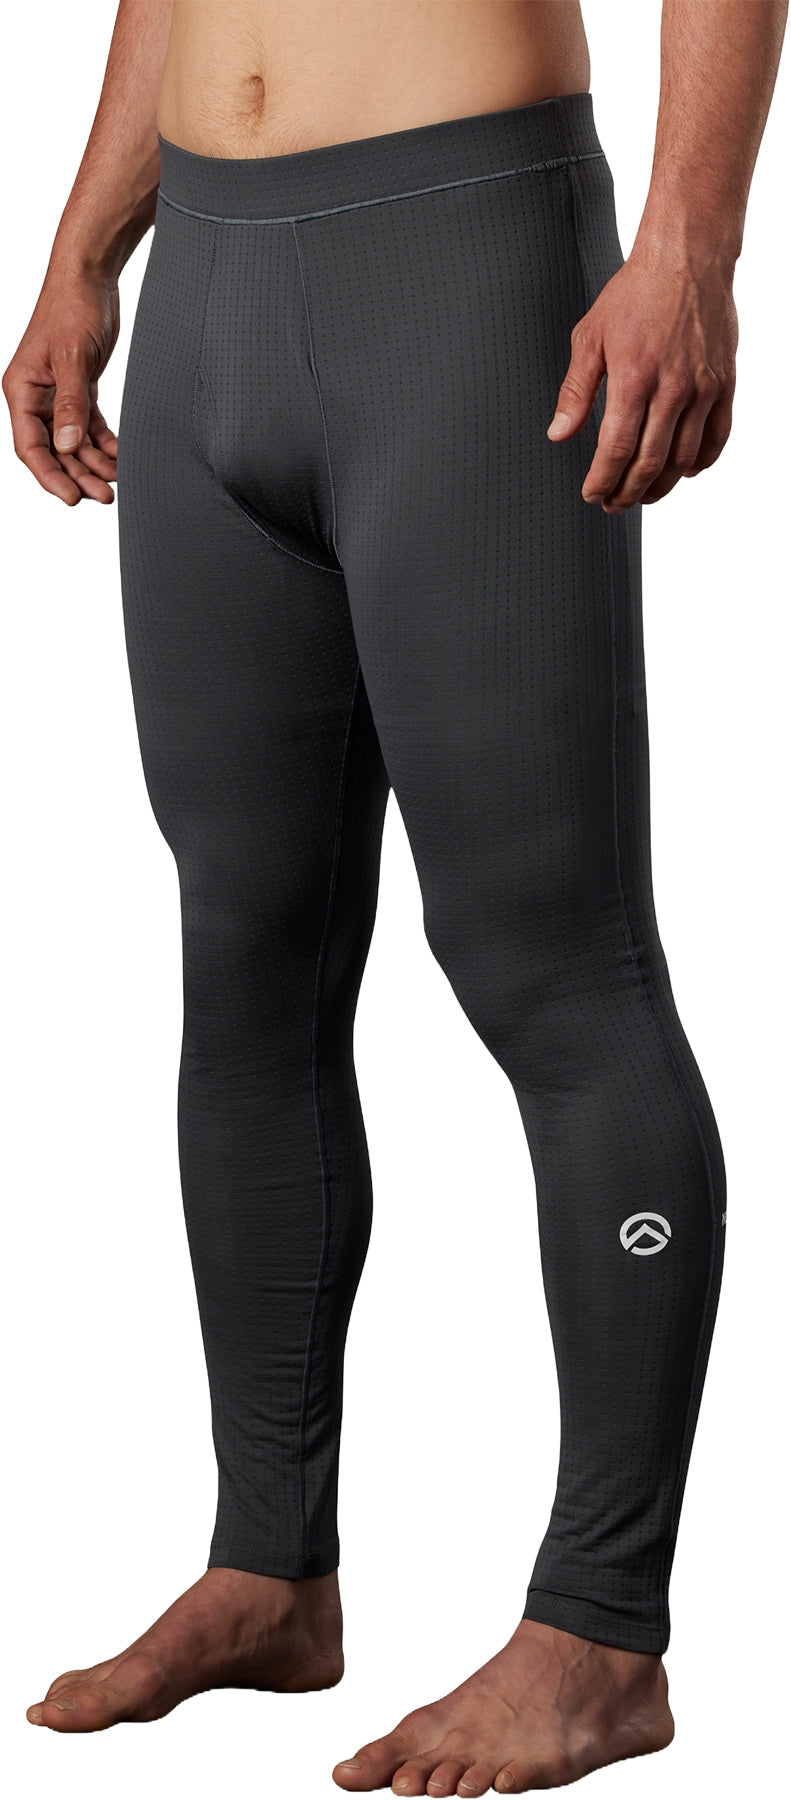 The North Face Ski Sport baselayer medium compression tights in black and  grey, Compare